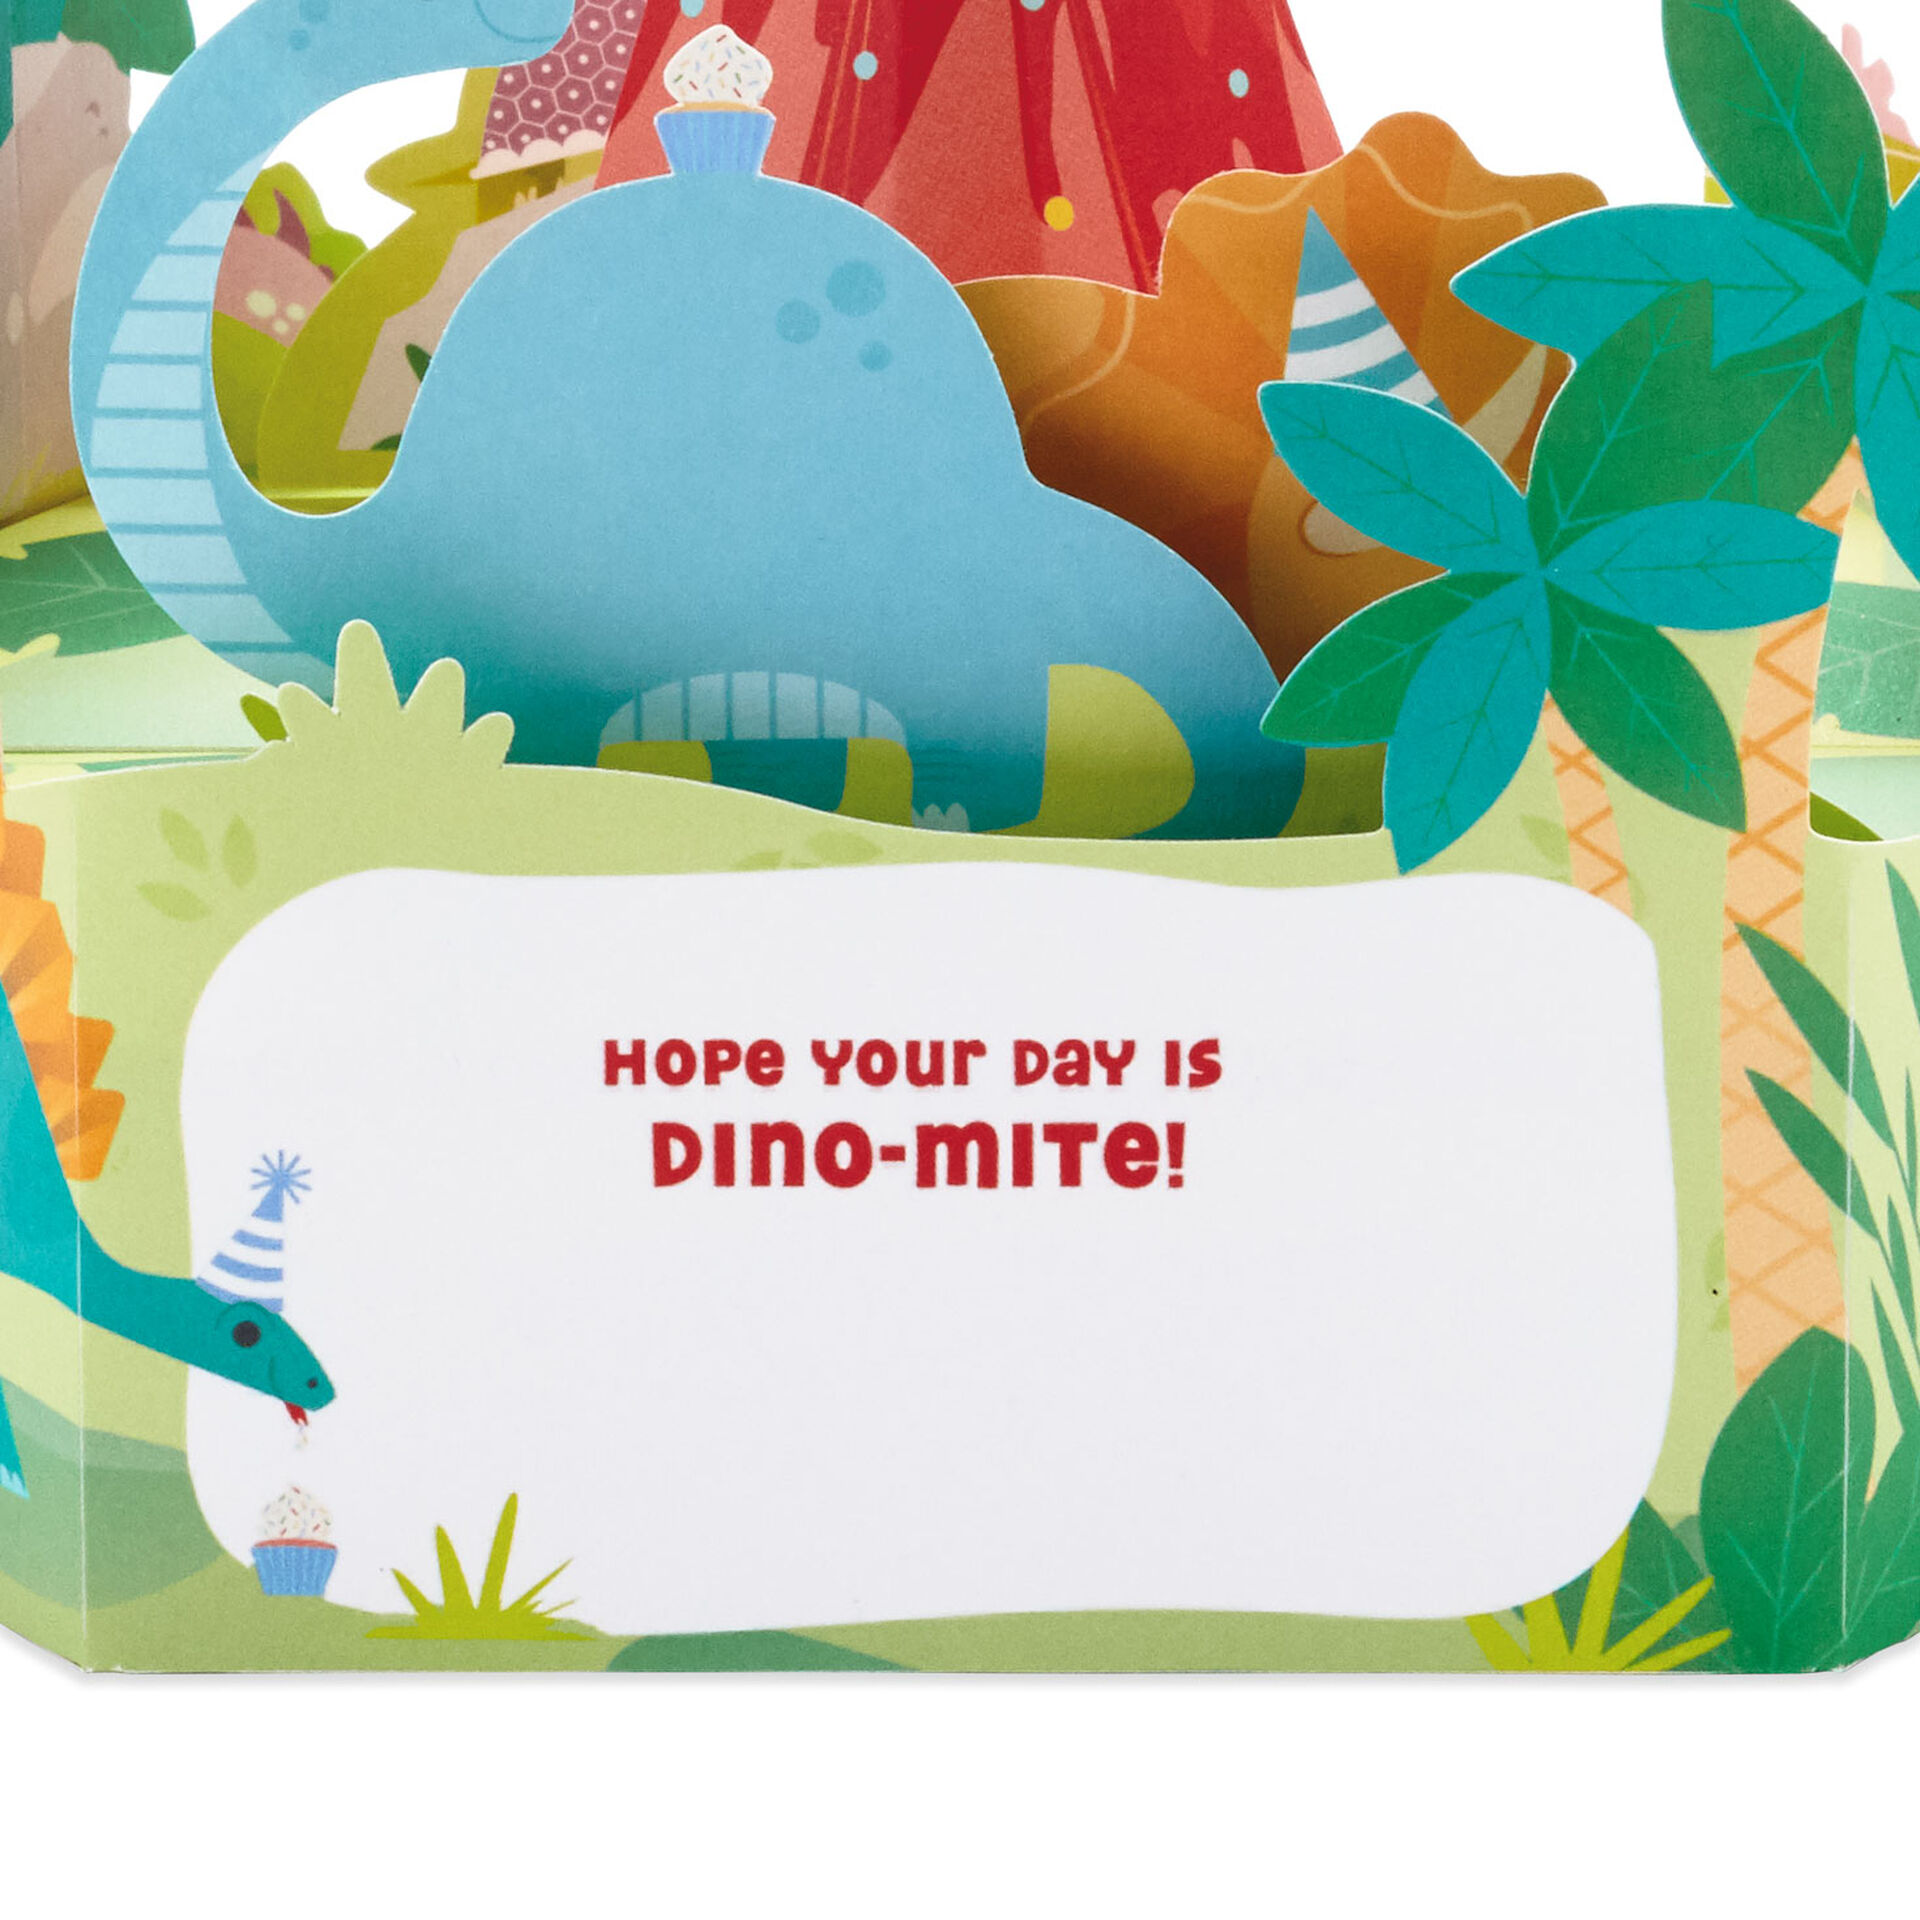 Dinosaurs-Music-&-Light-3D-PopUp-Birthday-Card-for-Kids_999TNG1429_03